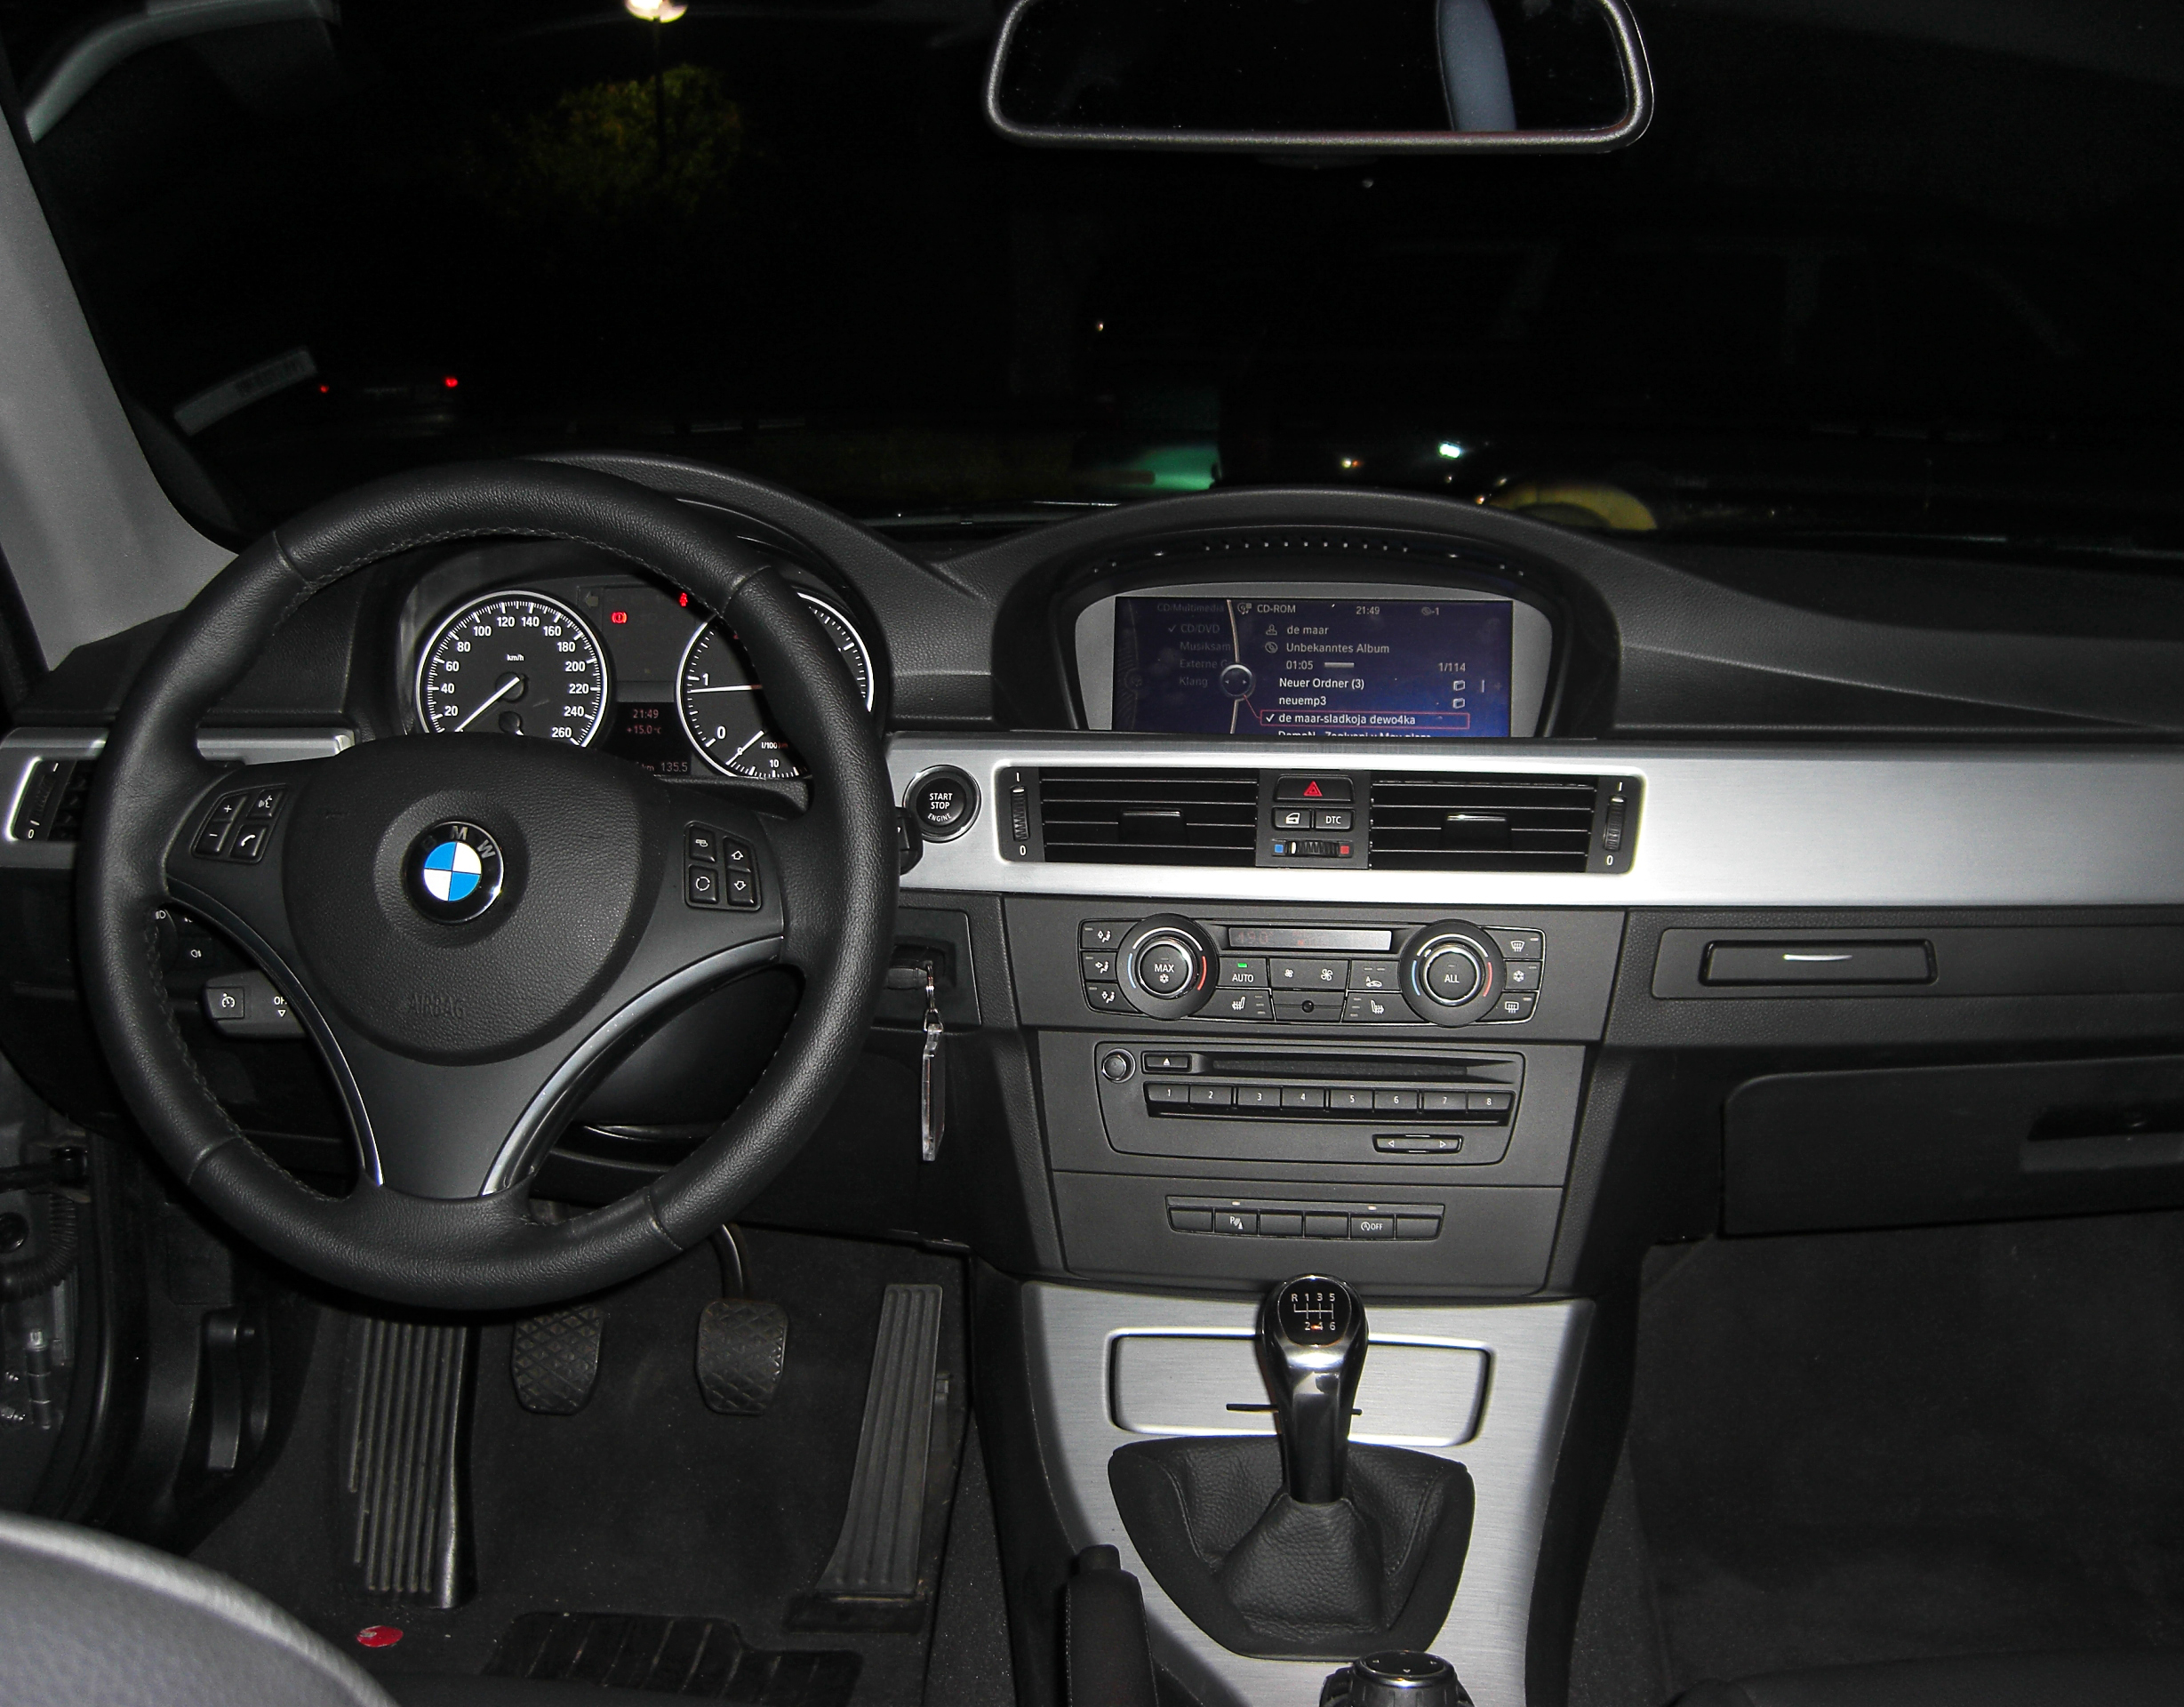 Dossier : BMW 320d coupÃ© (E92) Interieur 20100910.jpg - Wikimedia Commons